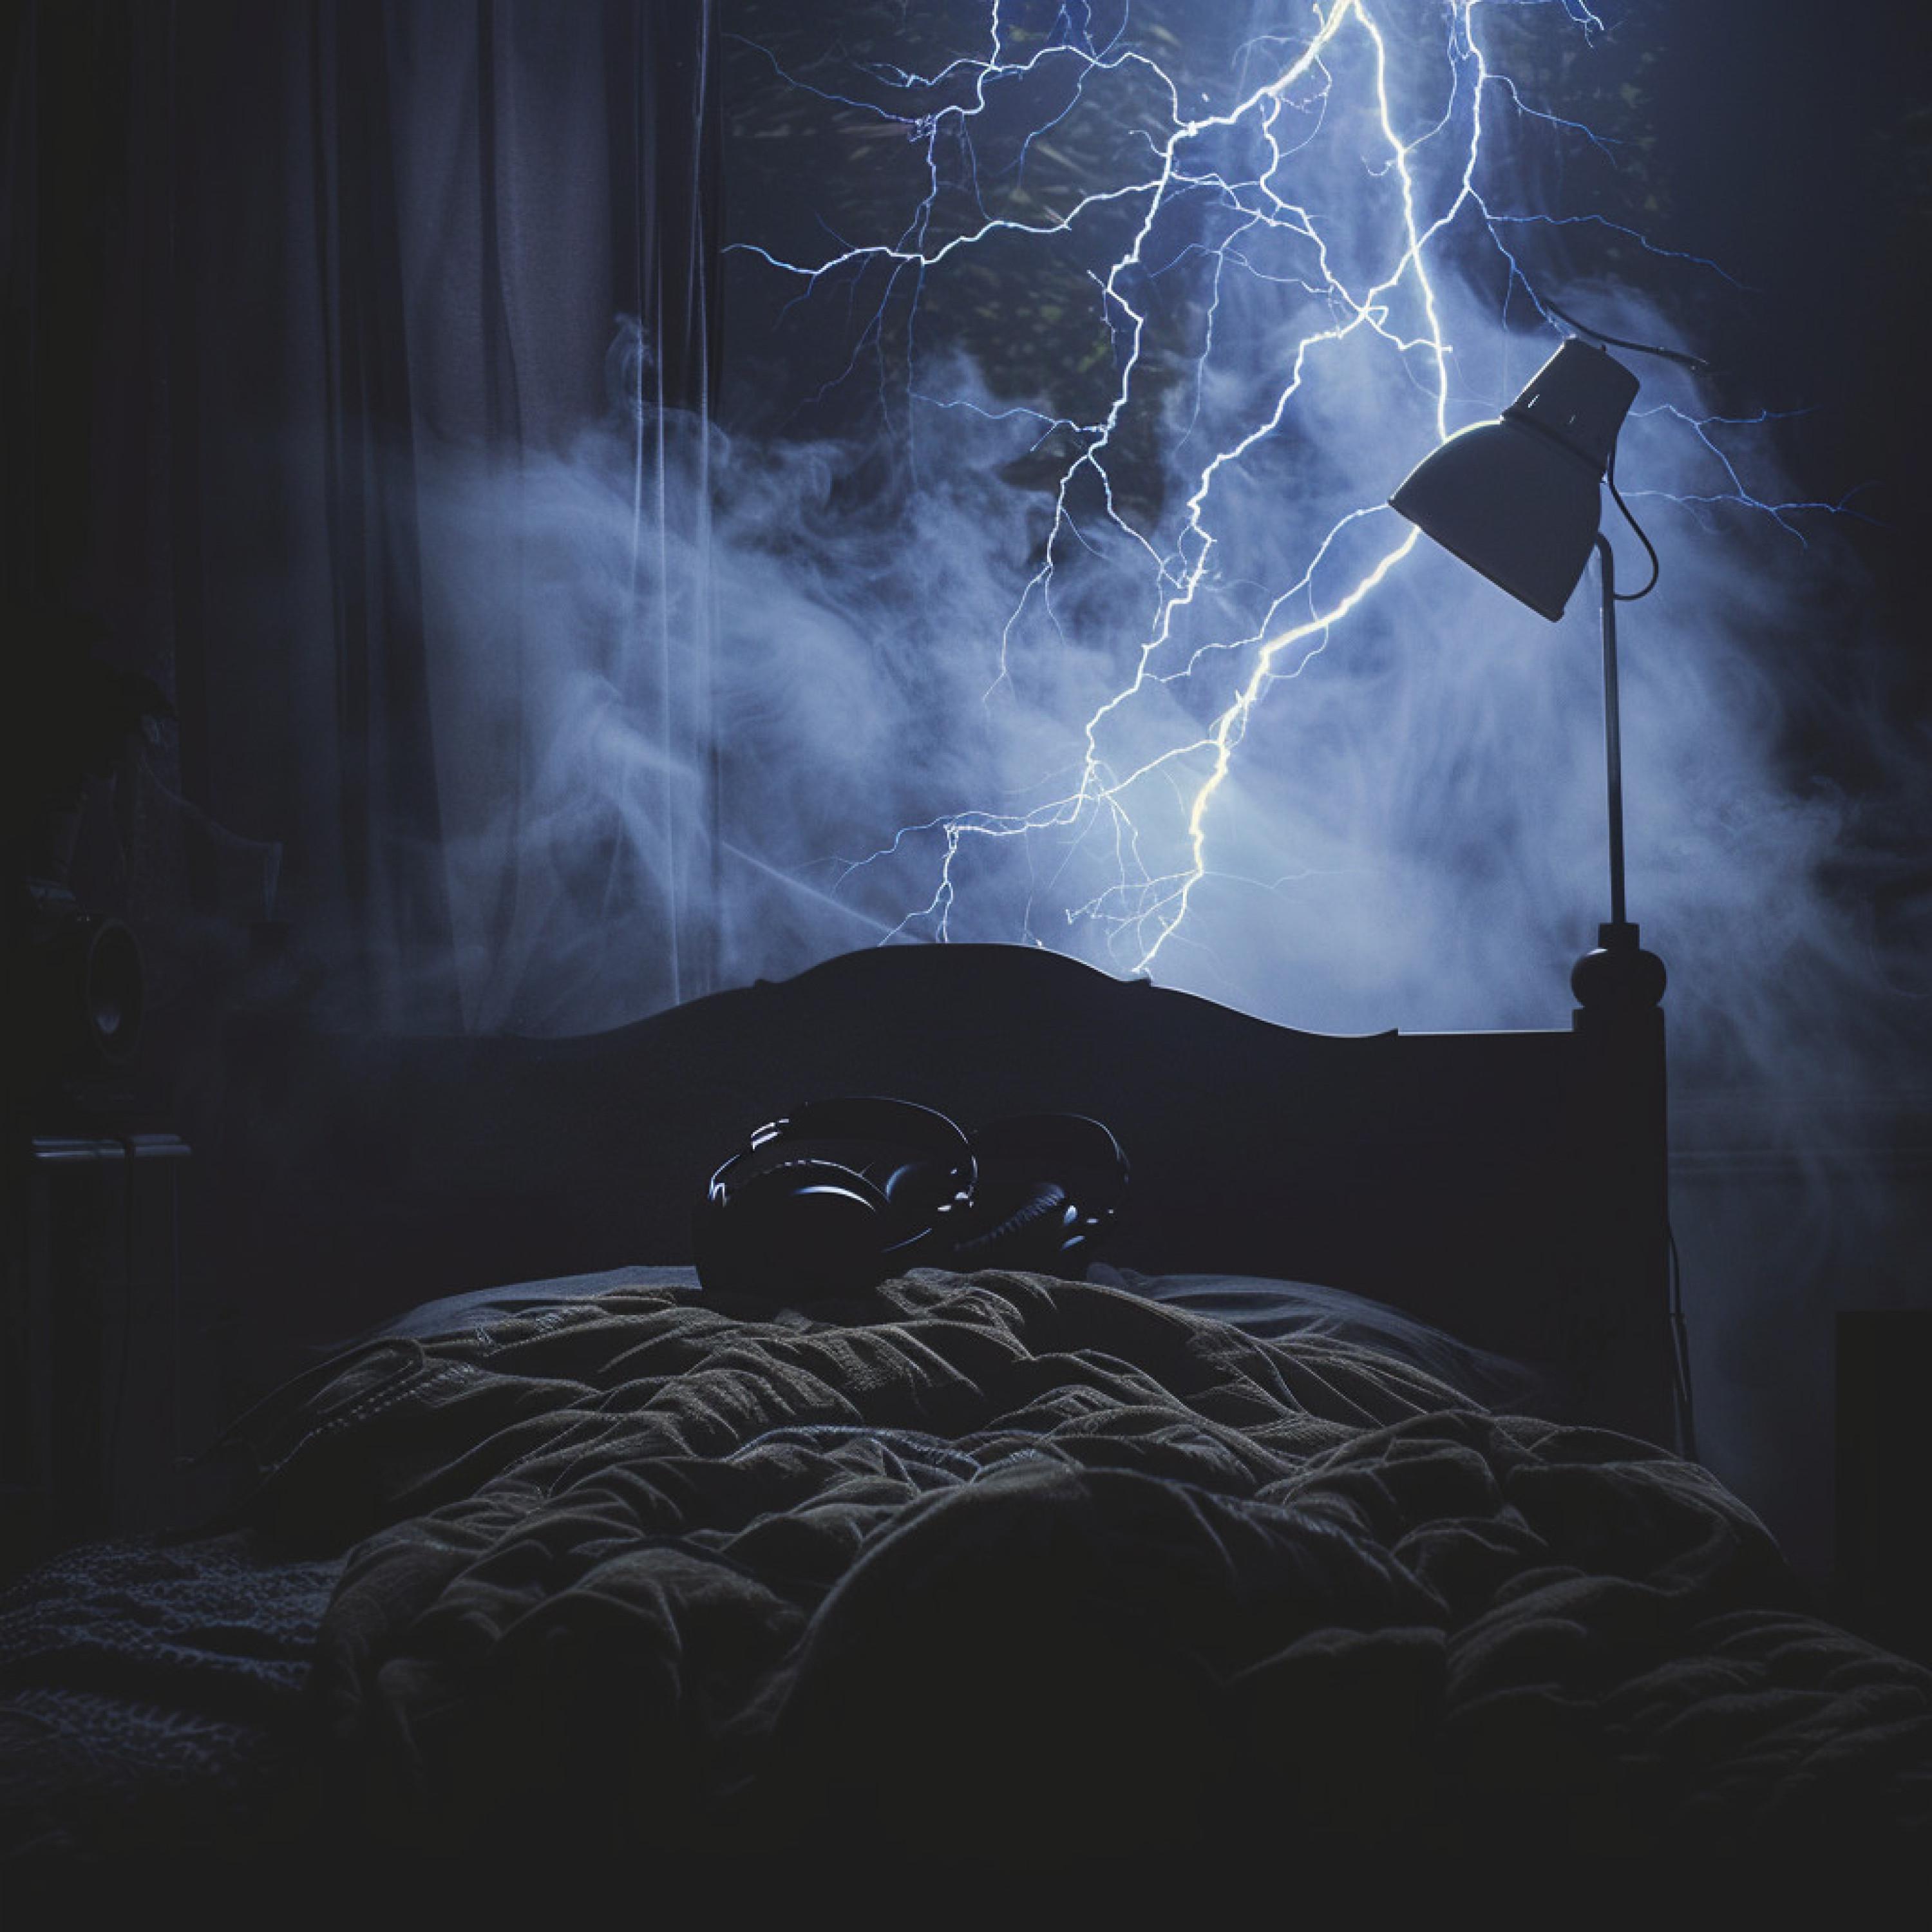 Sleeping Music - Dreaming Under Thunder's Song